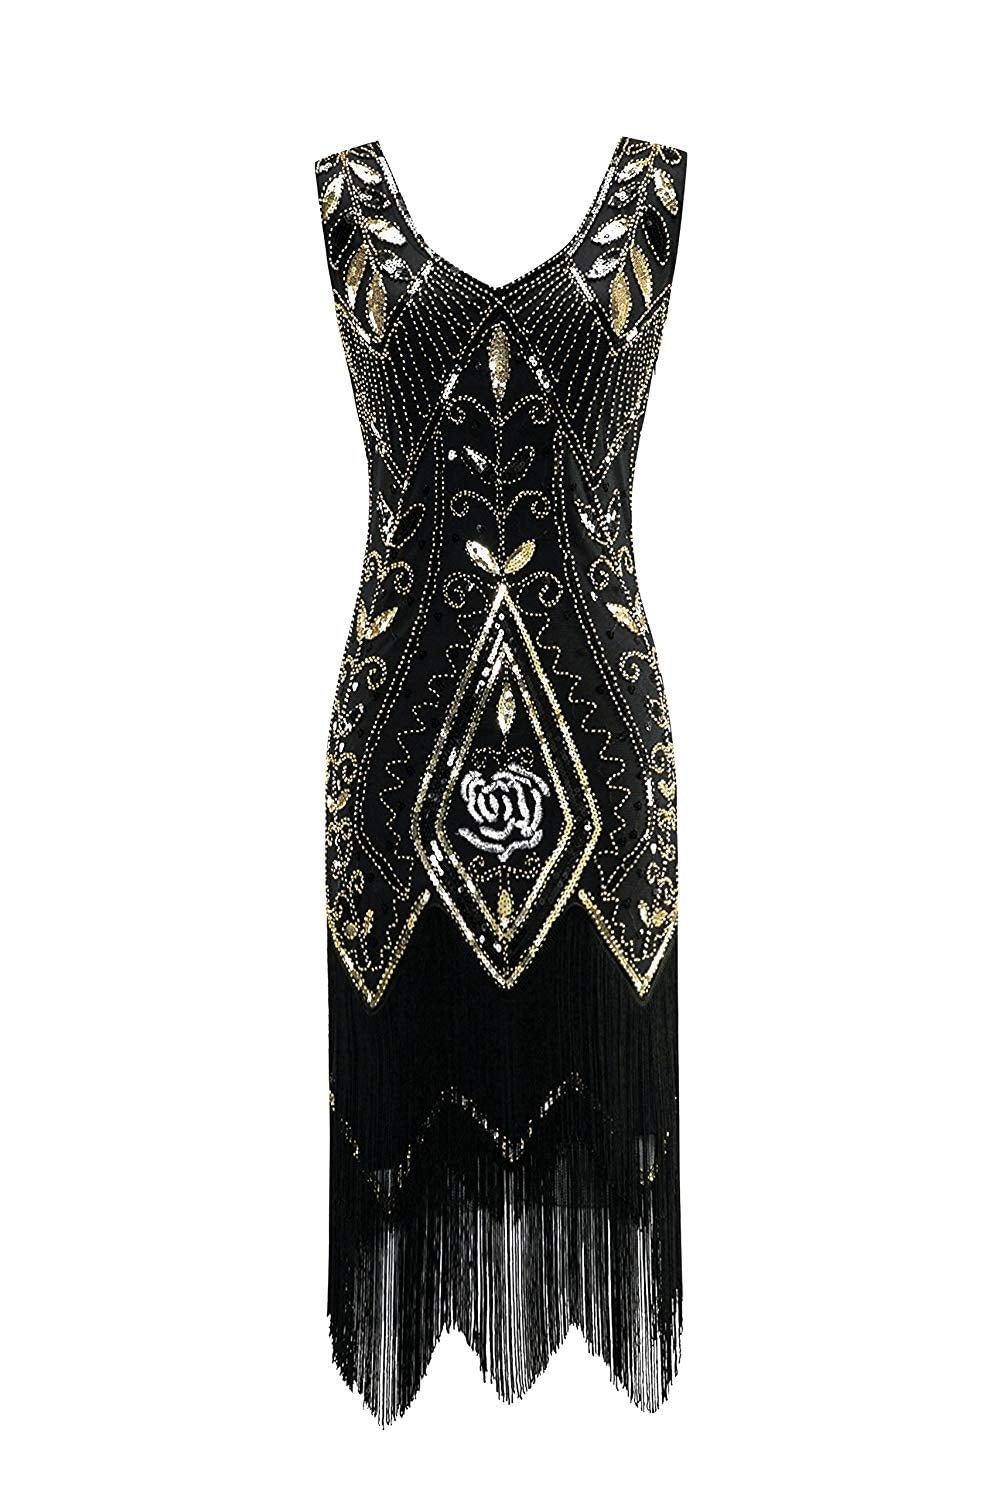 1920s Dress Women's Vintage Flapper Fringe Beaded Great Gatsby Party Dress